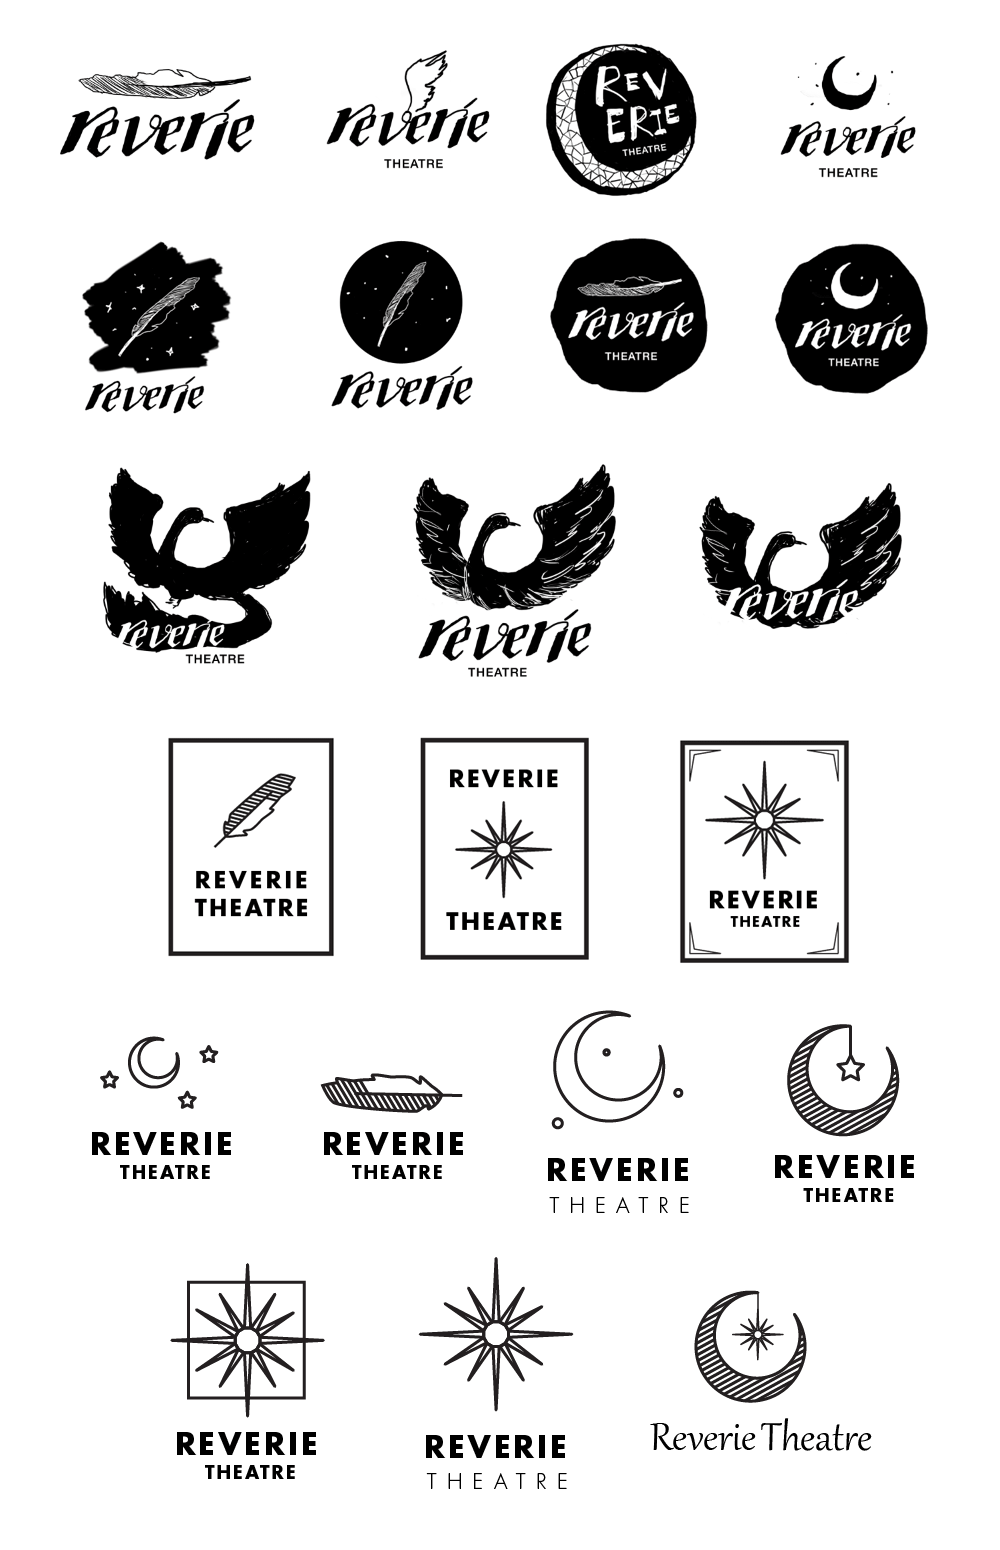 Reverie Theatre logo sketches